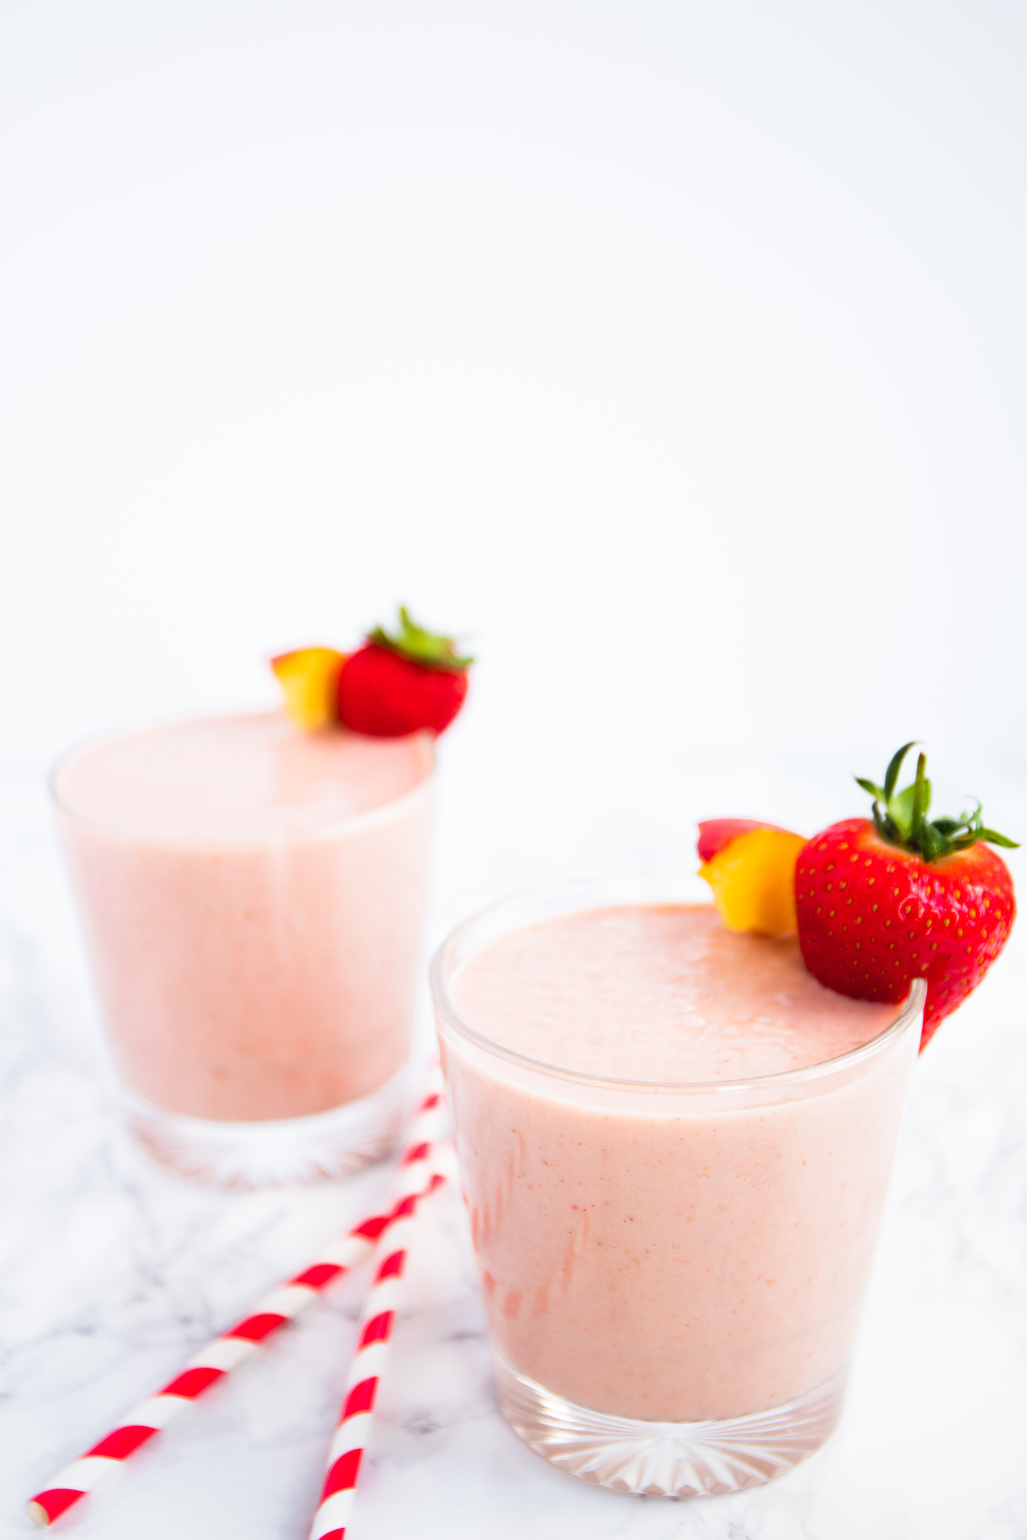 https://www.spoonfulofkindness.com/wp-content/uploads/2019/05/strawberry-peach-smoothie-2.jpg